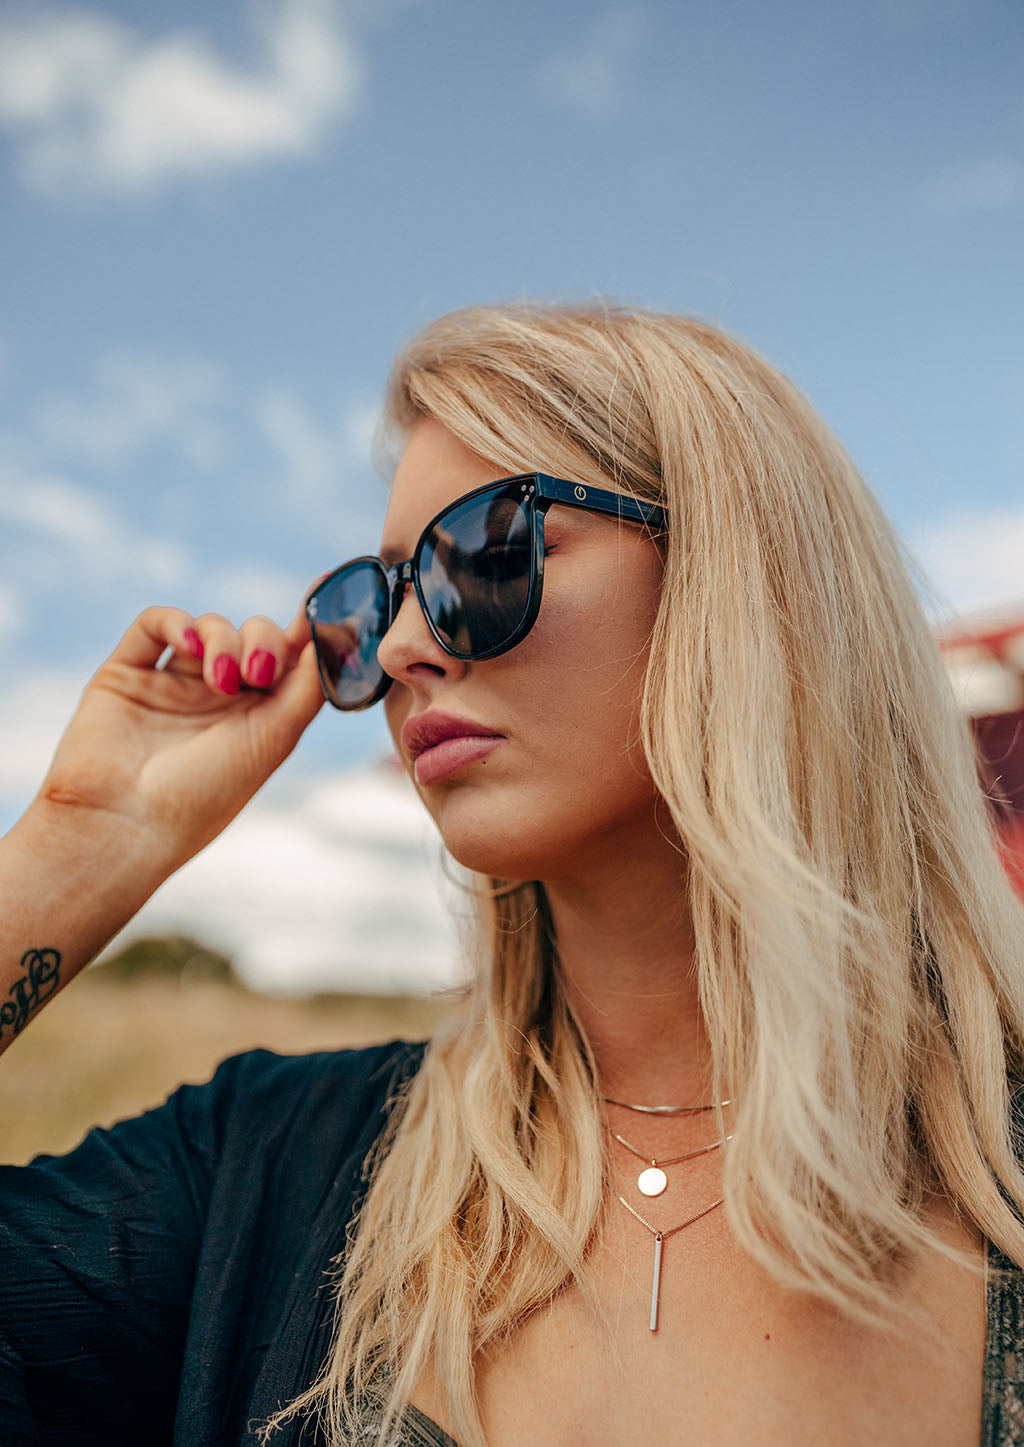 Dahlia Wayfarer sunglasses - On female blonde model